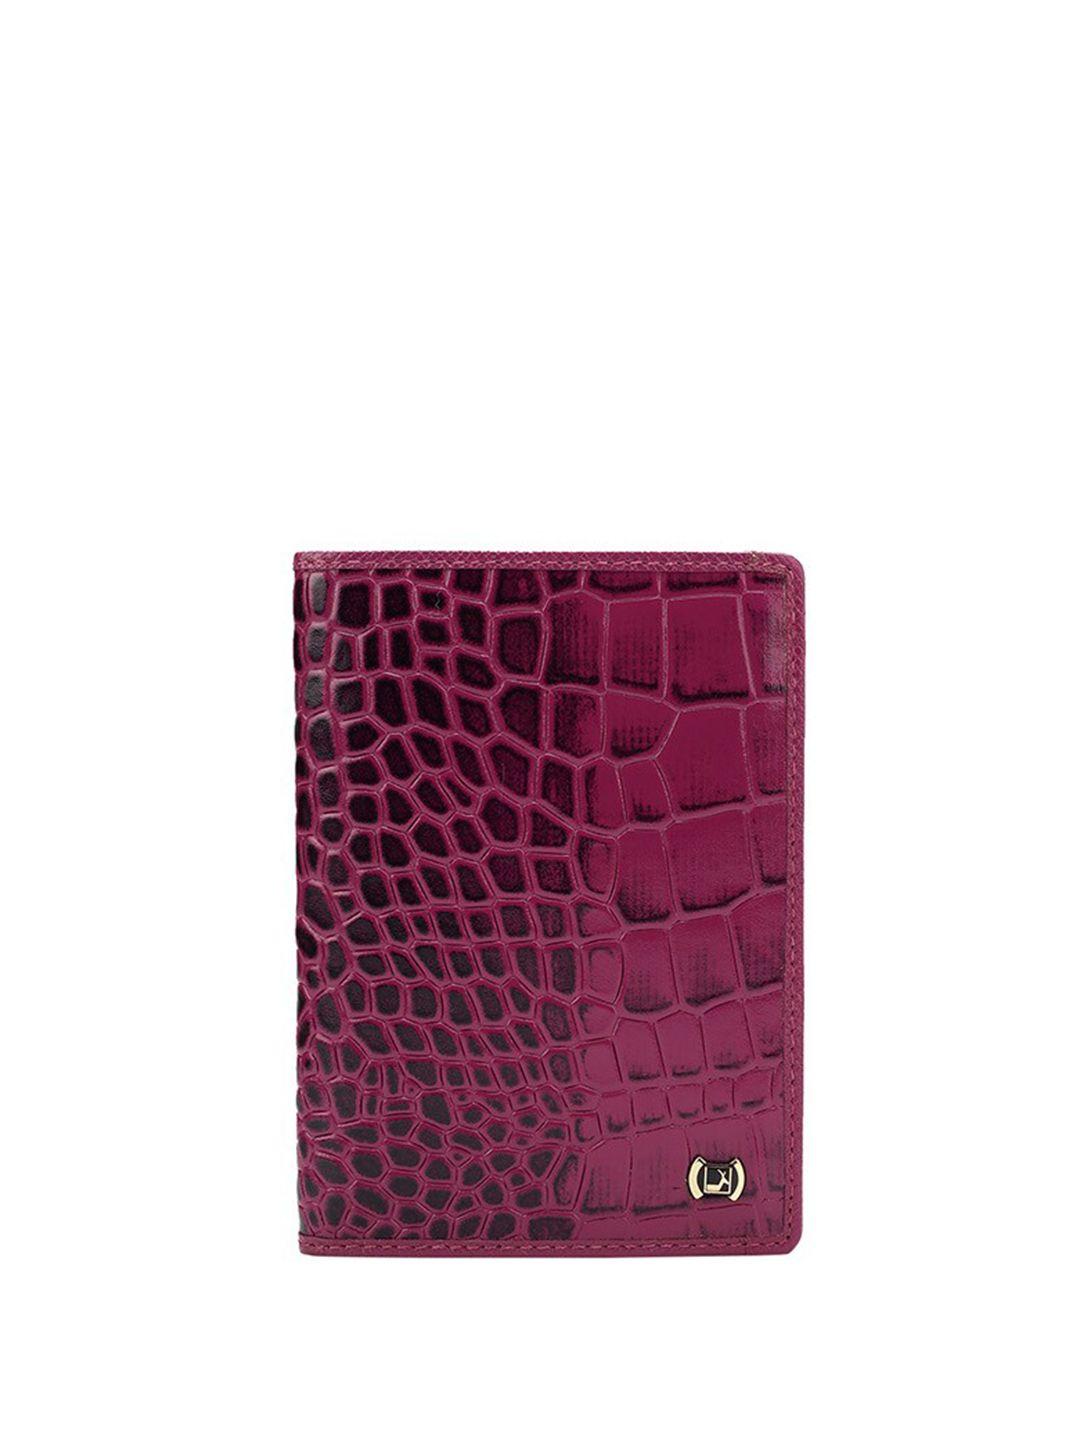 da milano unisex purple abstract textured leather passport holder